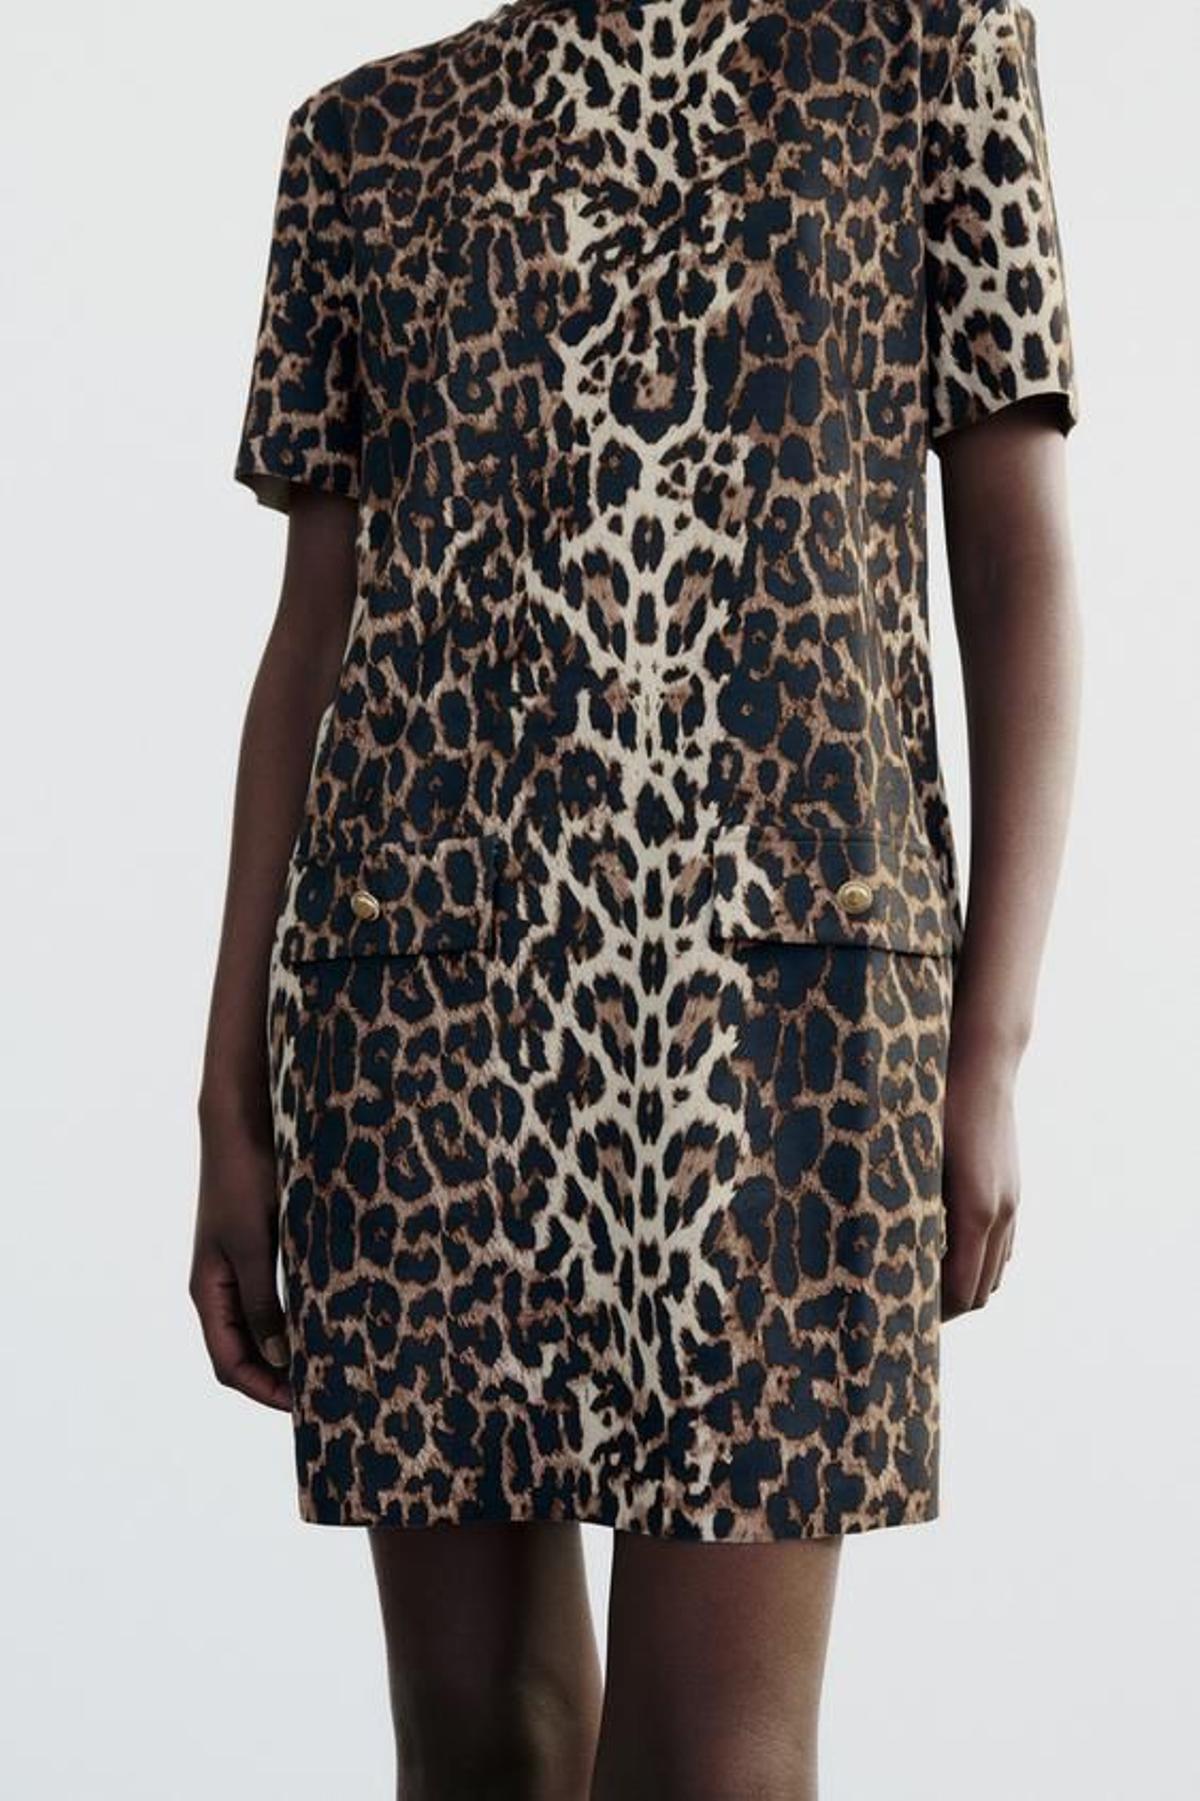 Vestido de leopardo